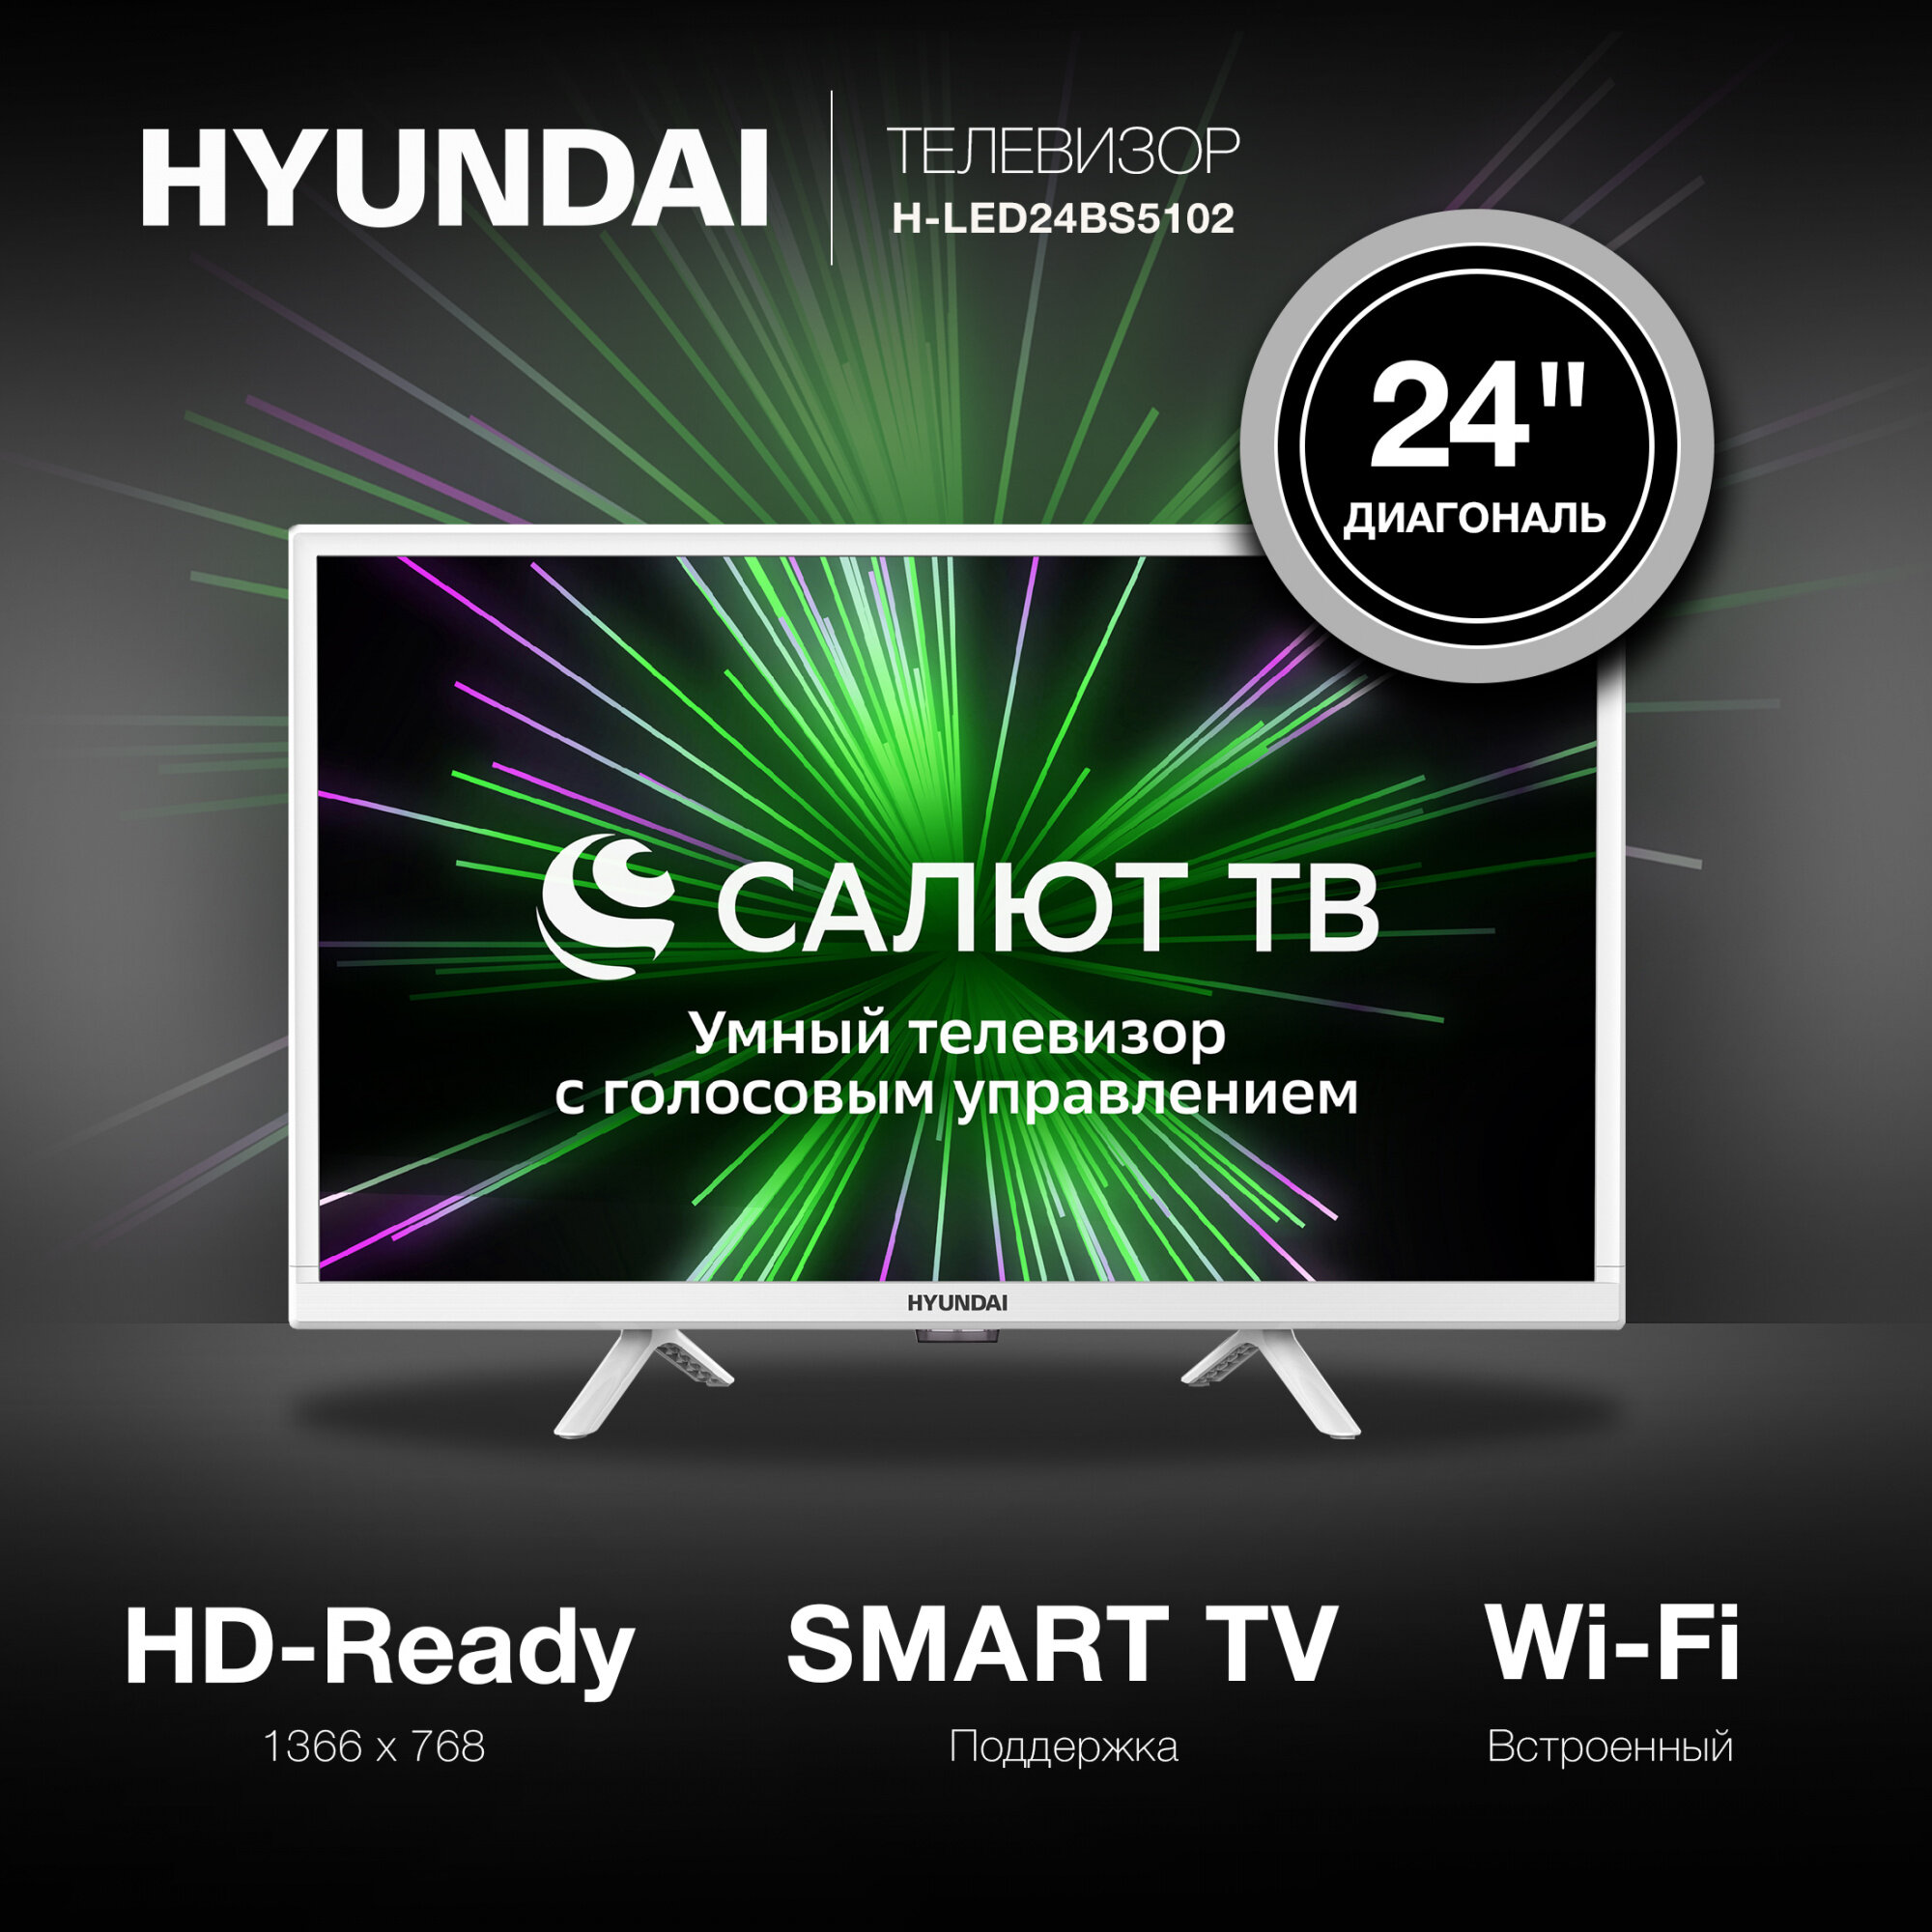 Телевизор LED Hyundai 24" H-LED24BS5102 Салют ТВ Slim Design белый/HD/60Hz/DVB-T/DVB-T2/DVB-C/DVB-S/DVB-S2/USB/WiFi/Smart TV - фотография № 7